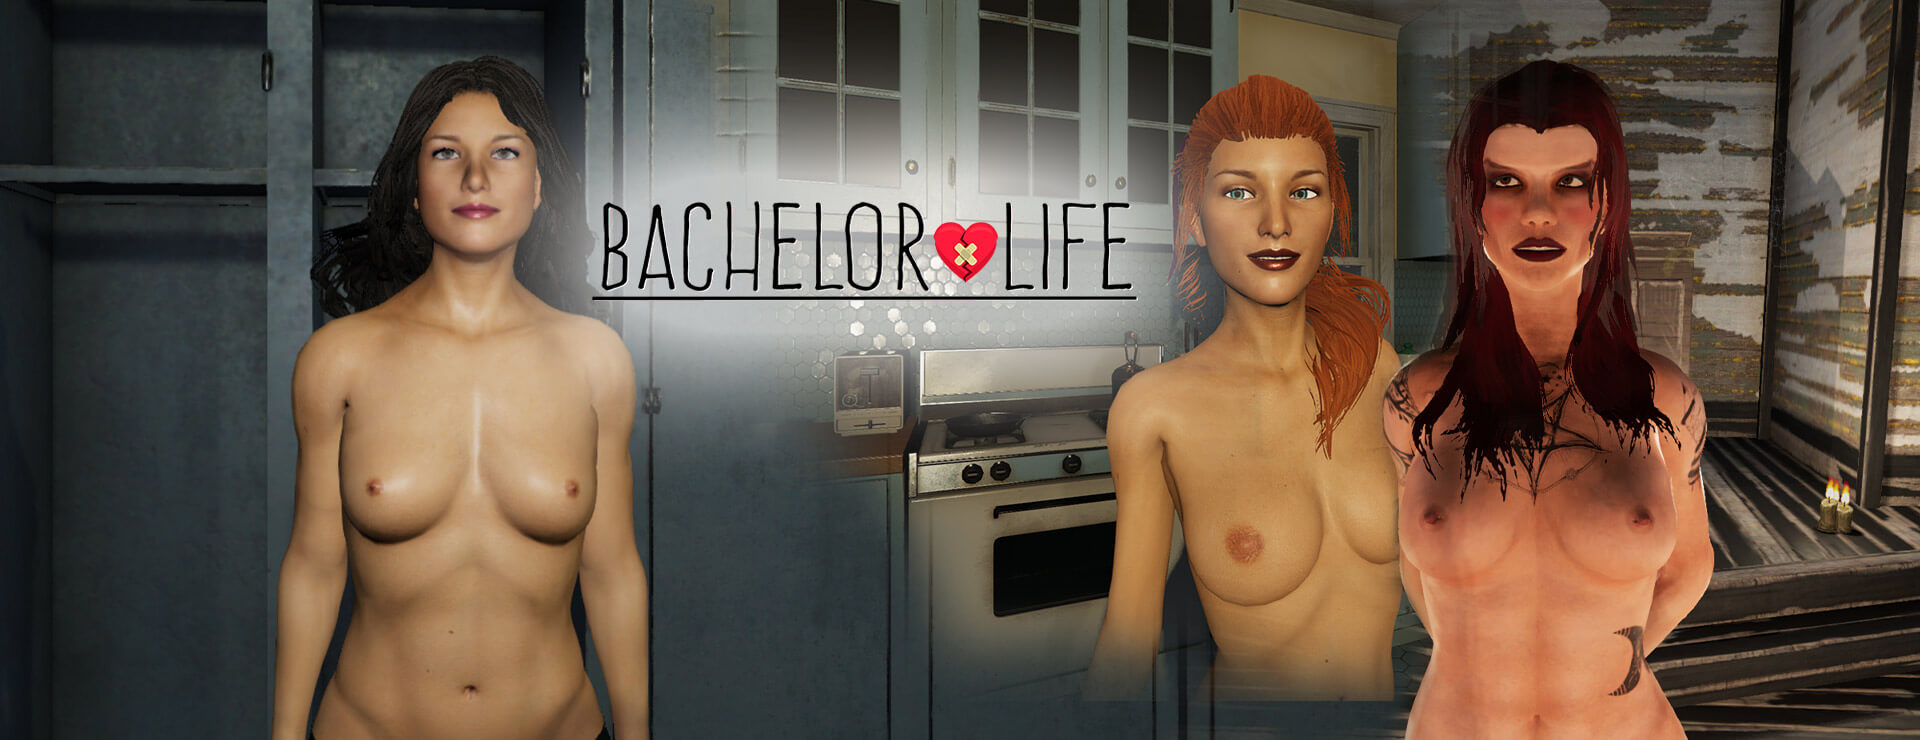 Bachelor Life - Simulation Spiel